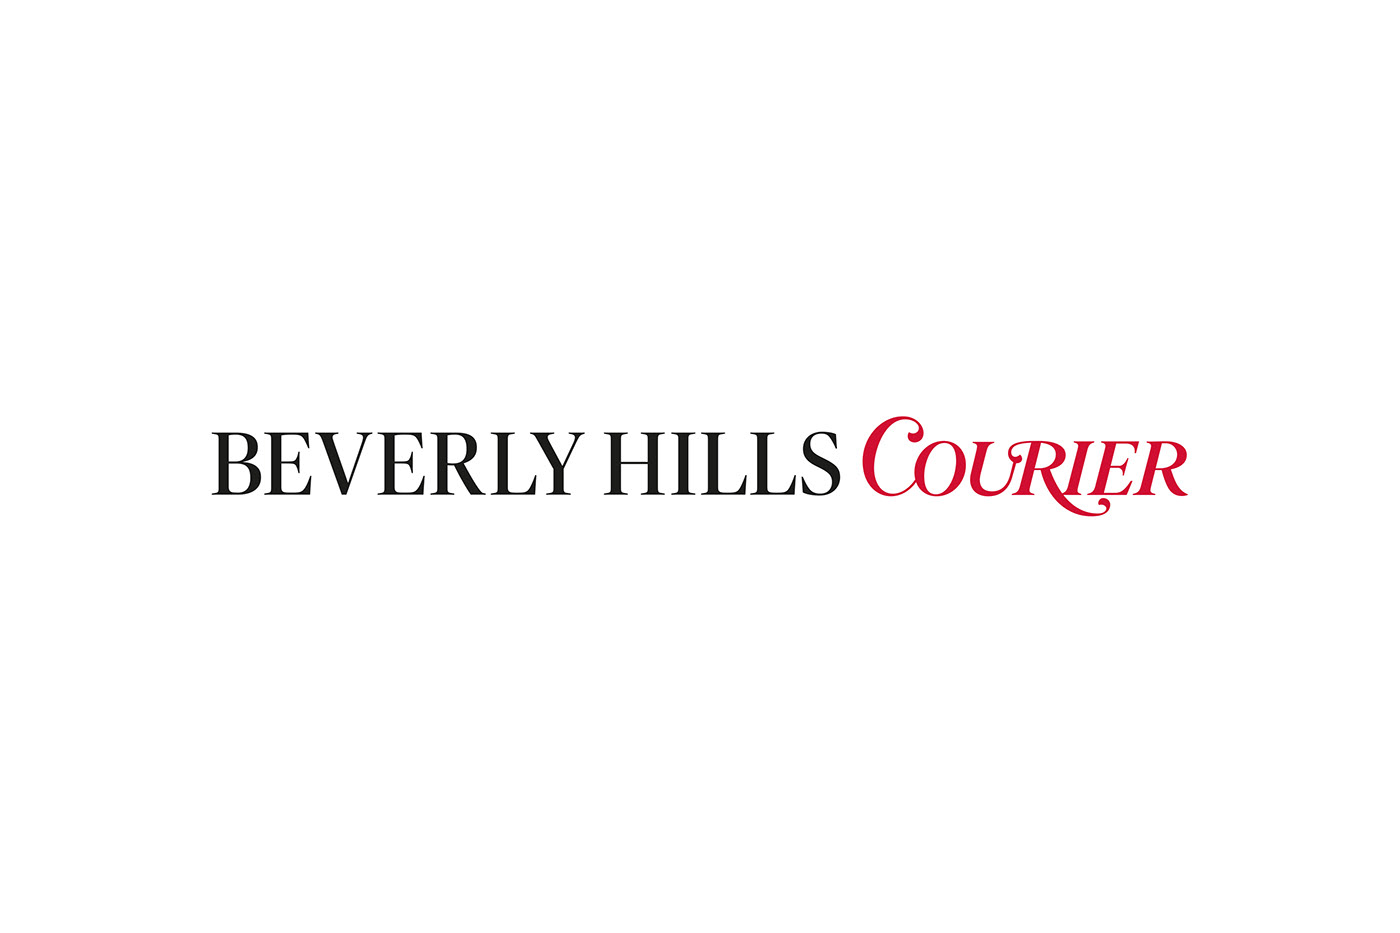 Beverly Hills logo masthead newspaper